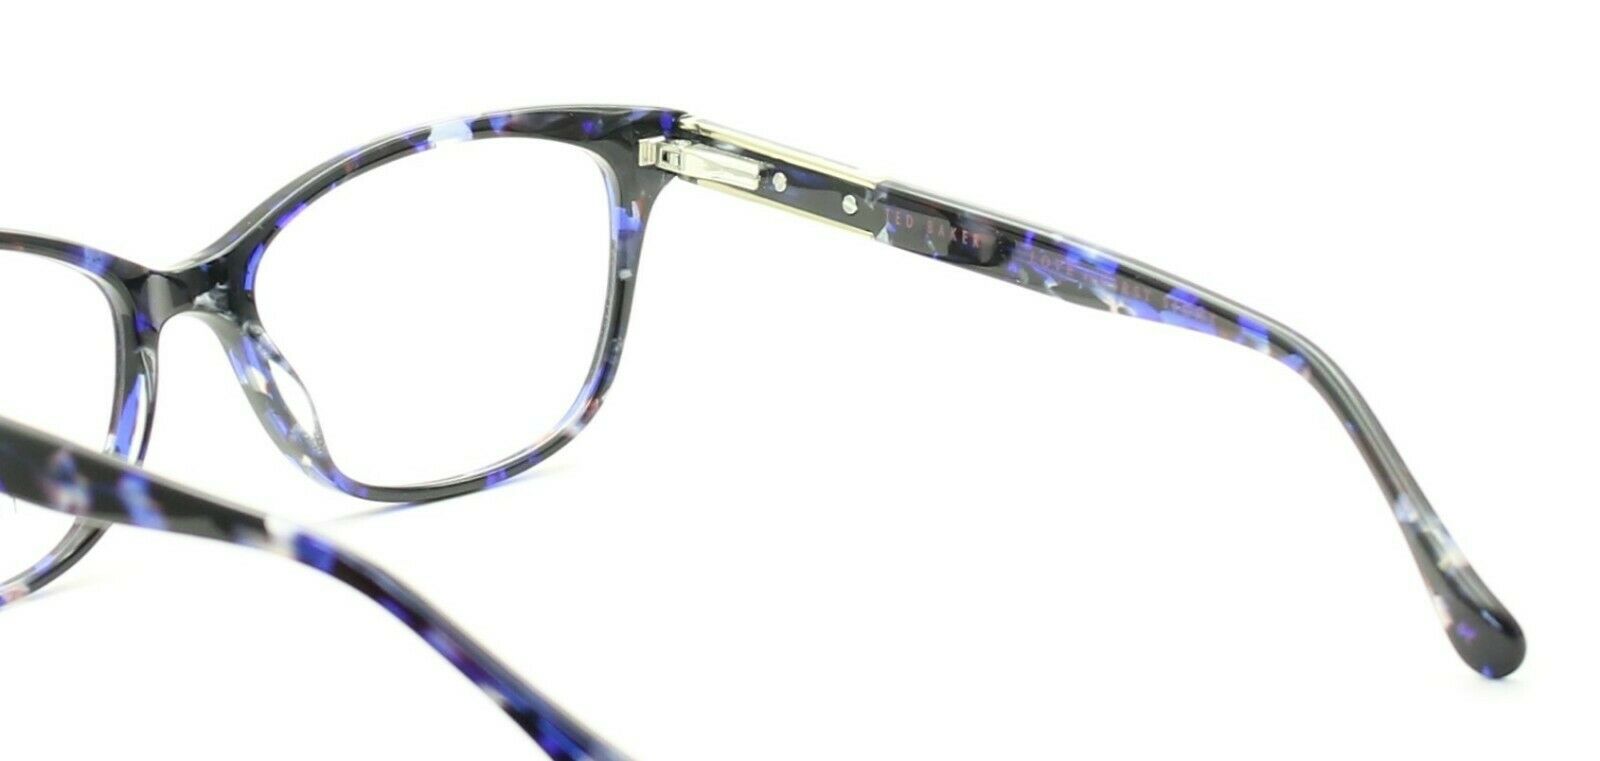 TED BAKER Senna 9124 693 52mm Eyewear FRAMES Glasses Eyeglasses RX Optical - New